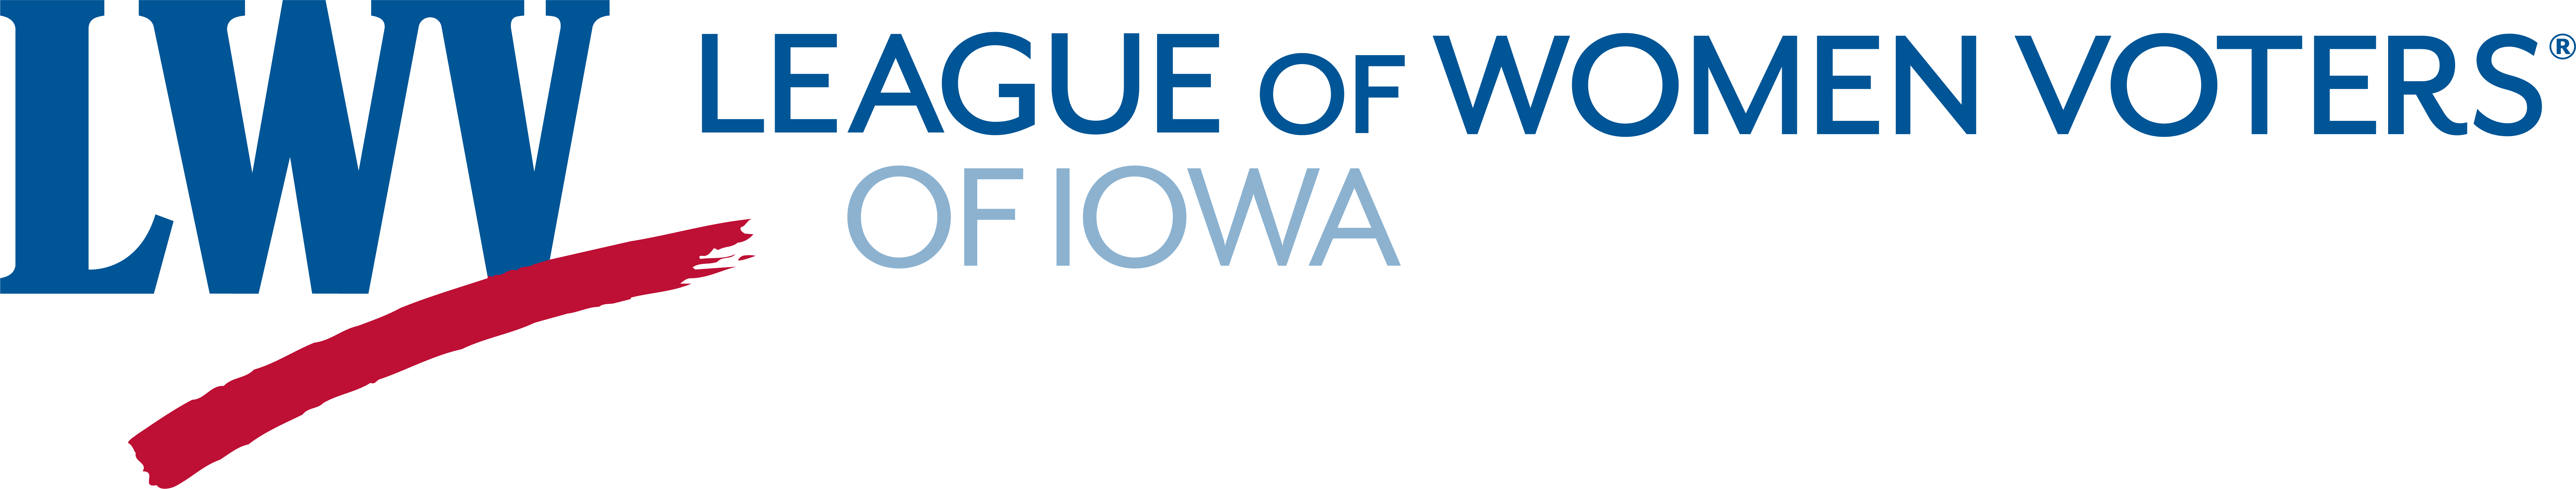 League of Women Voters of Iowa